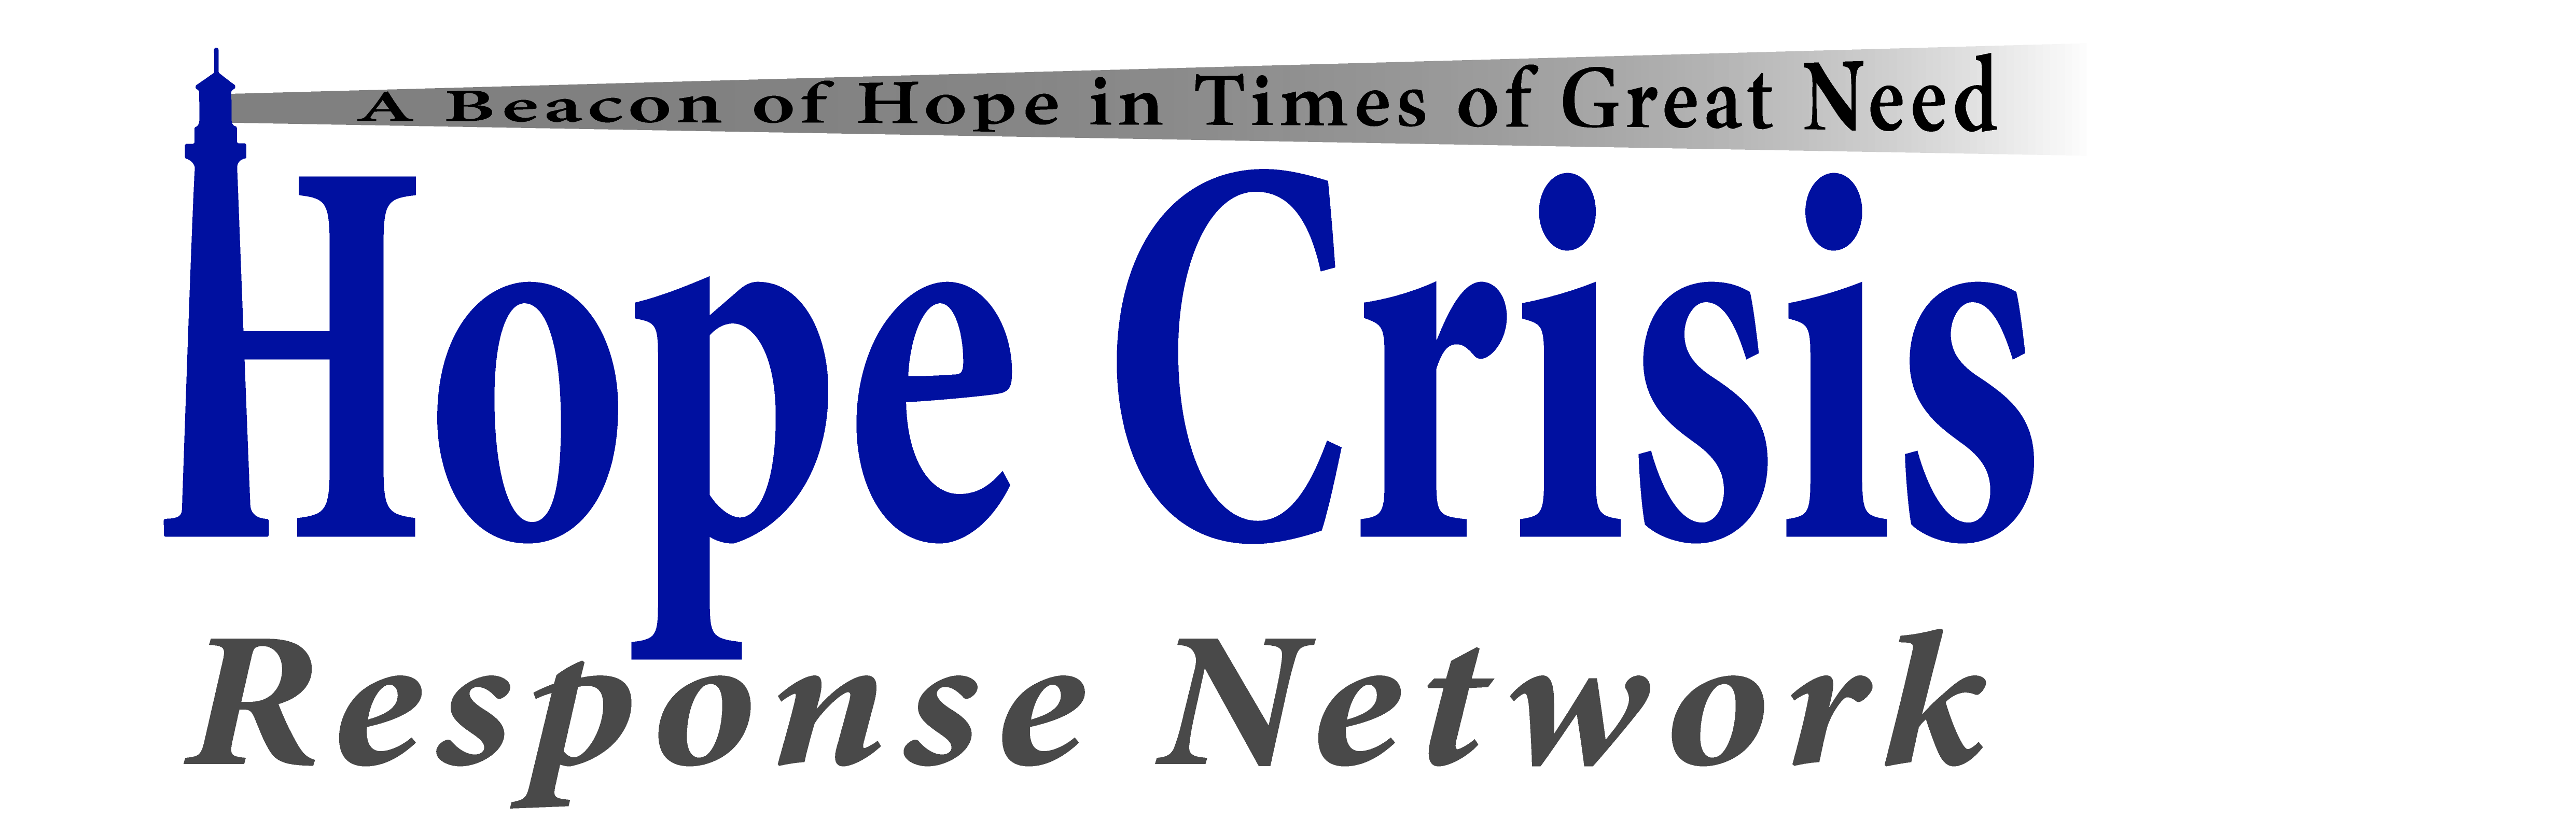 Hope Crisis Response Network